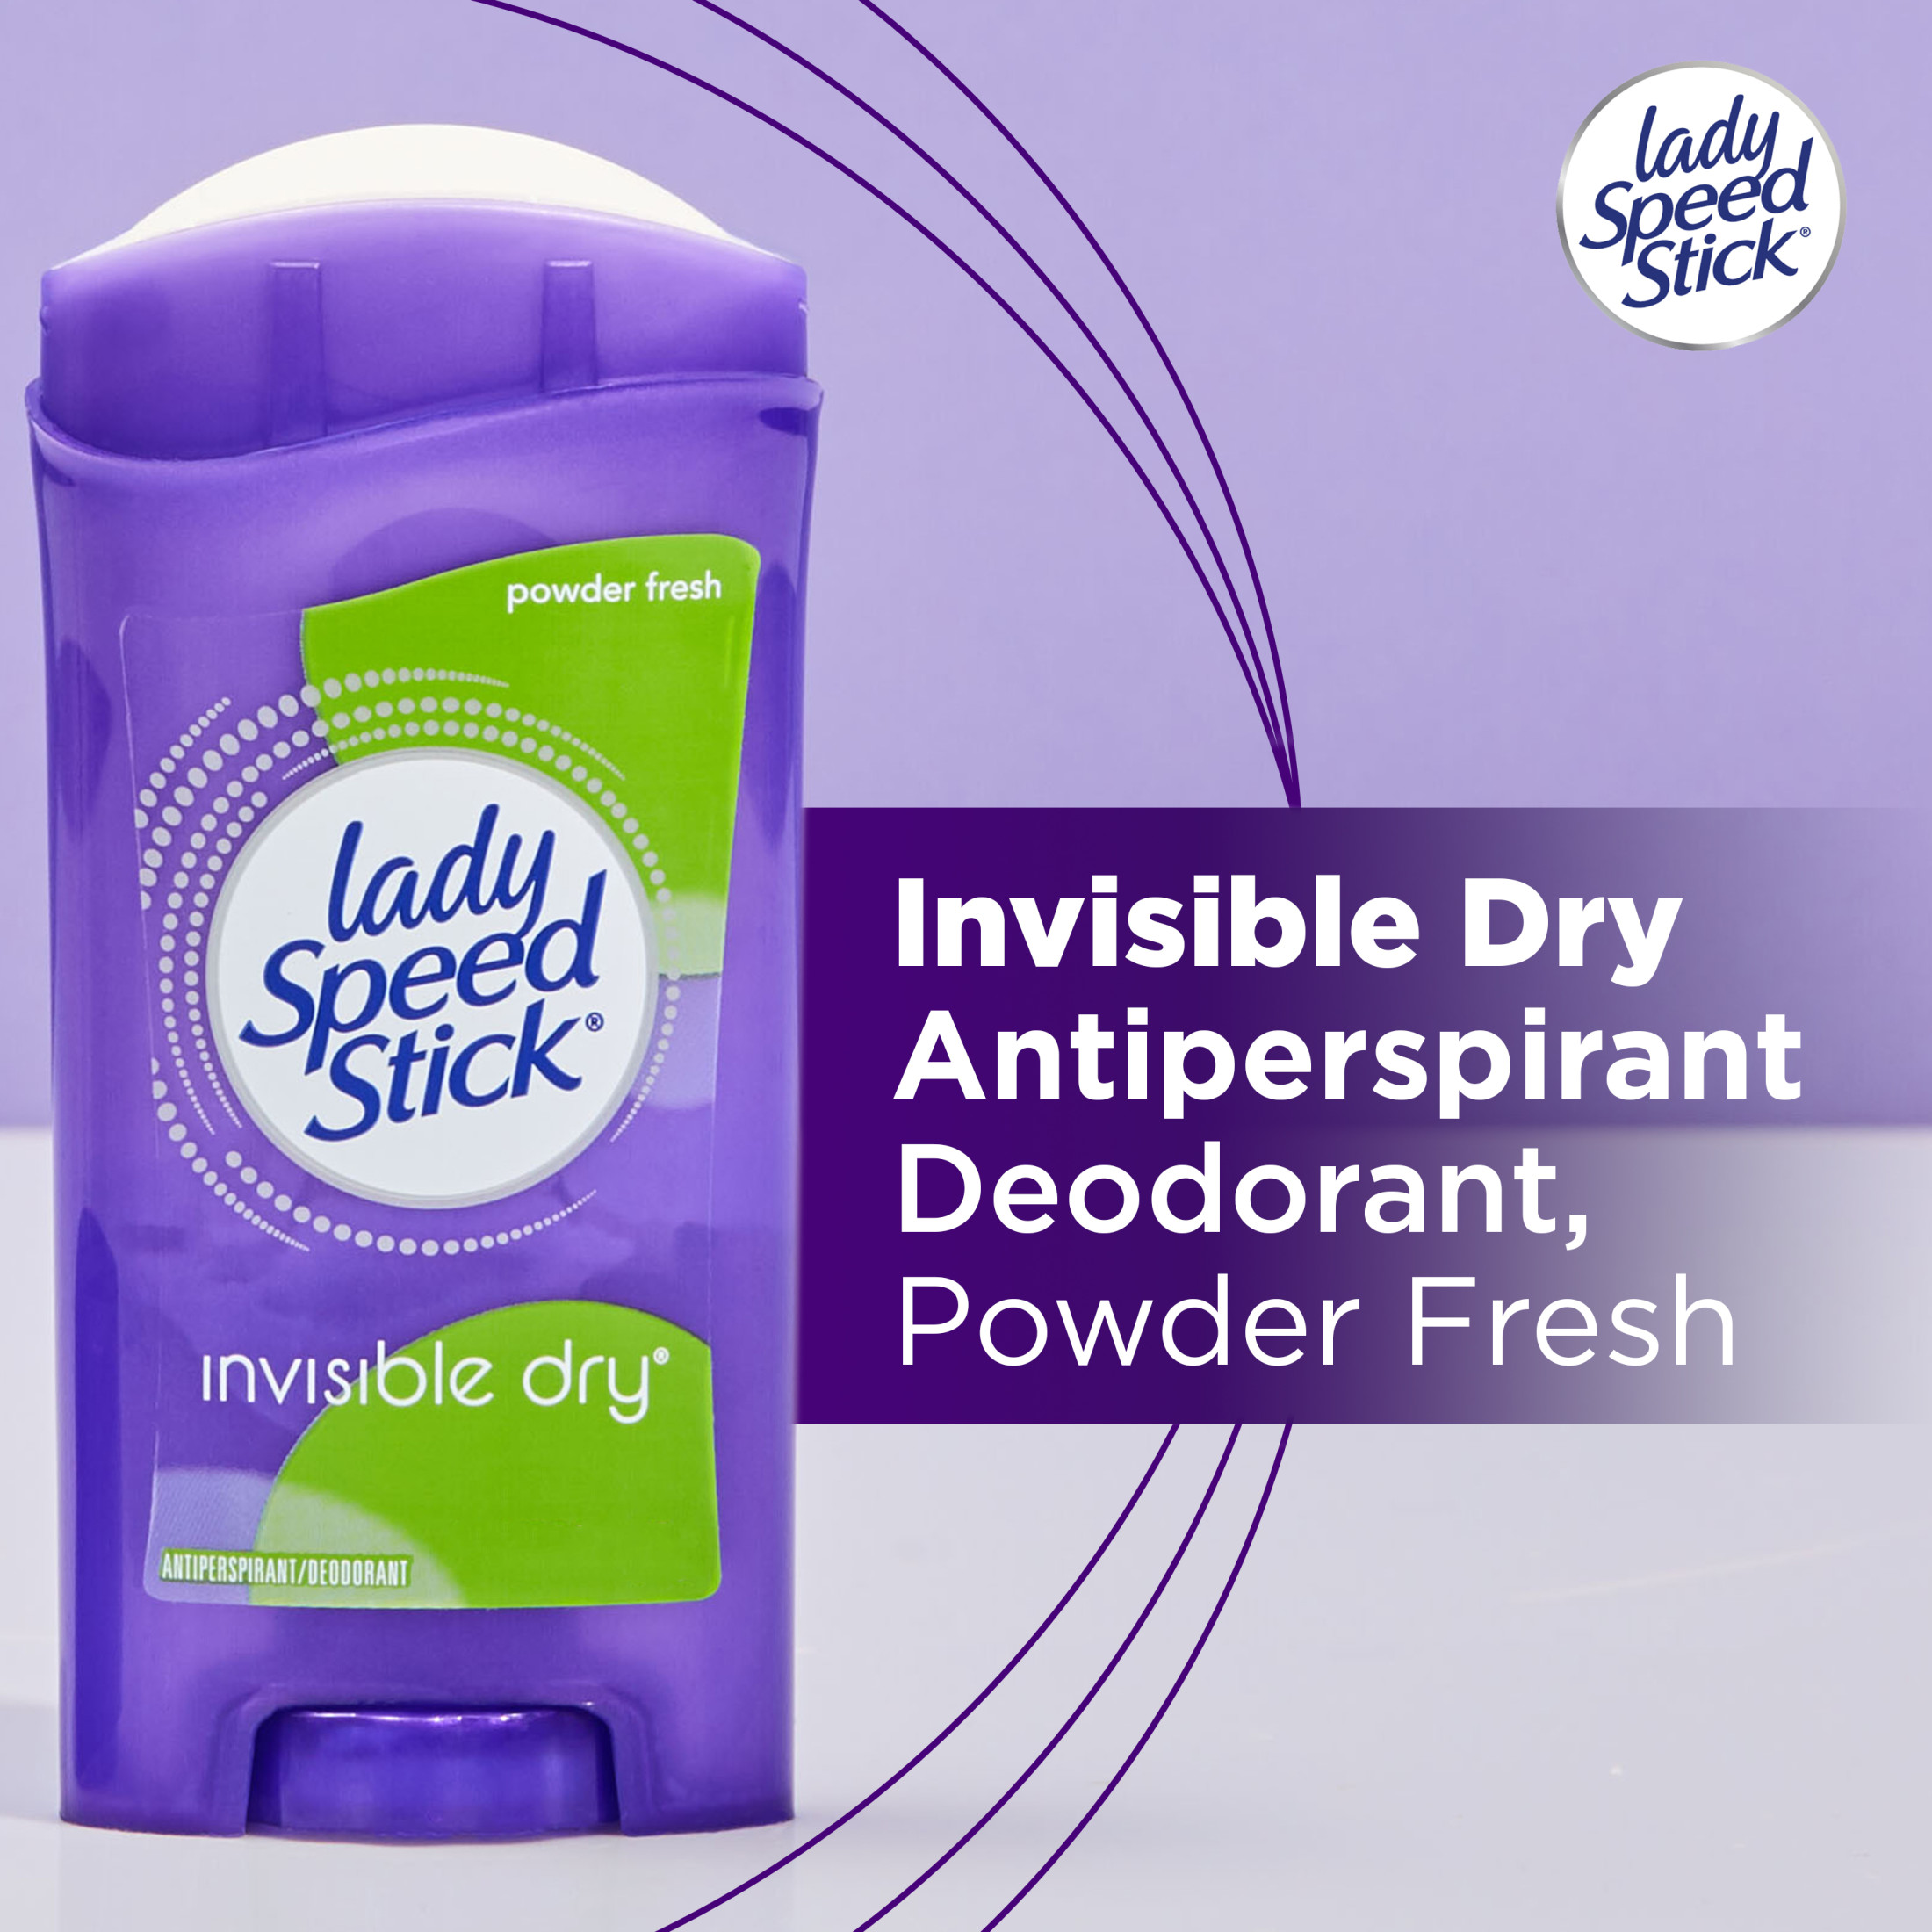 Lady Speed Stick Invisible Dry Antiperspirant Deodorant, Powder Fresh, 1.4oz - image 5 of 15